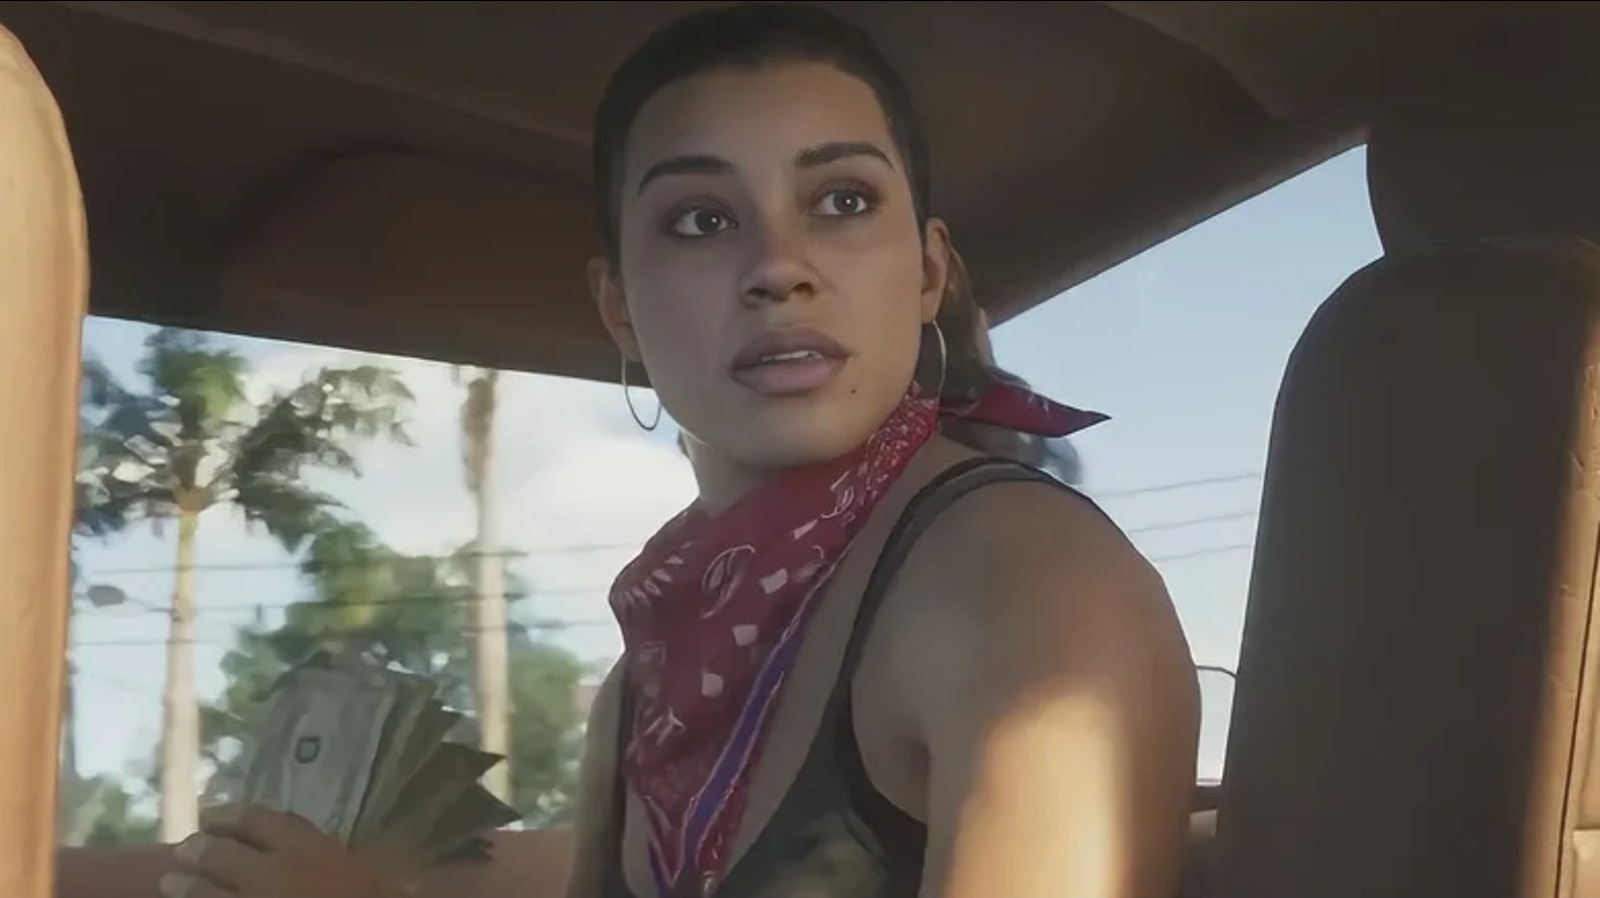 Massive GTA VI video leak reveals the secrets of Rockstar Games' upcoming  release